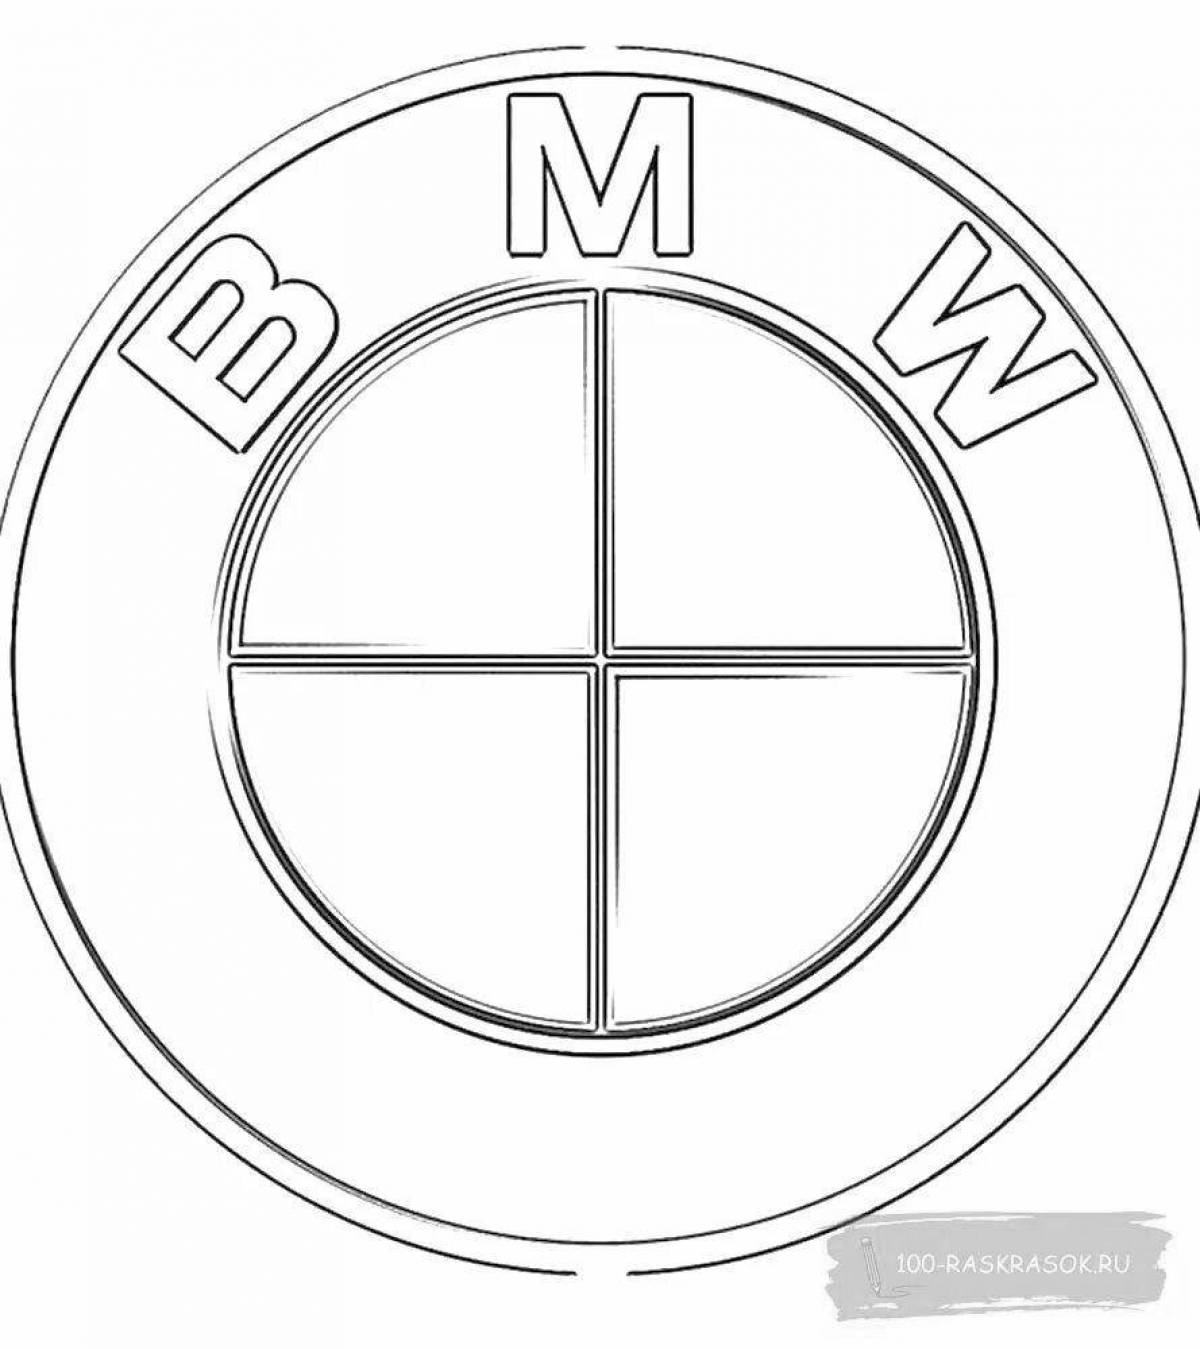 Fascinating bmw logo coloring page